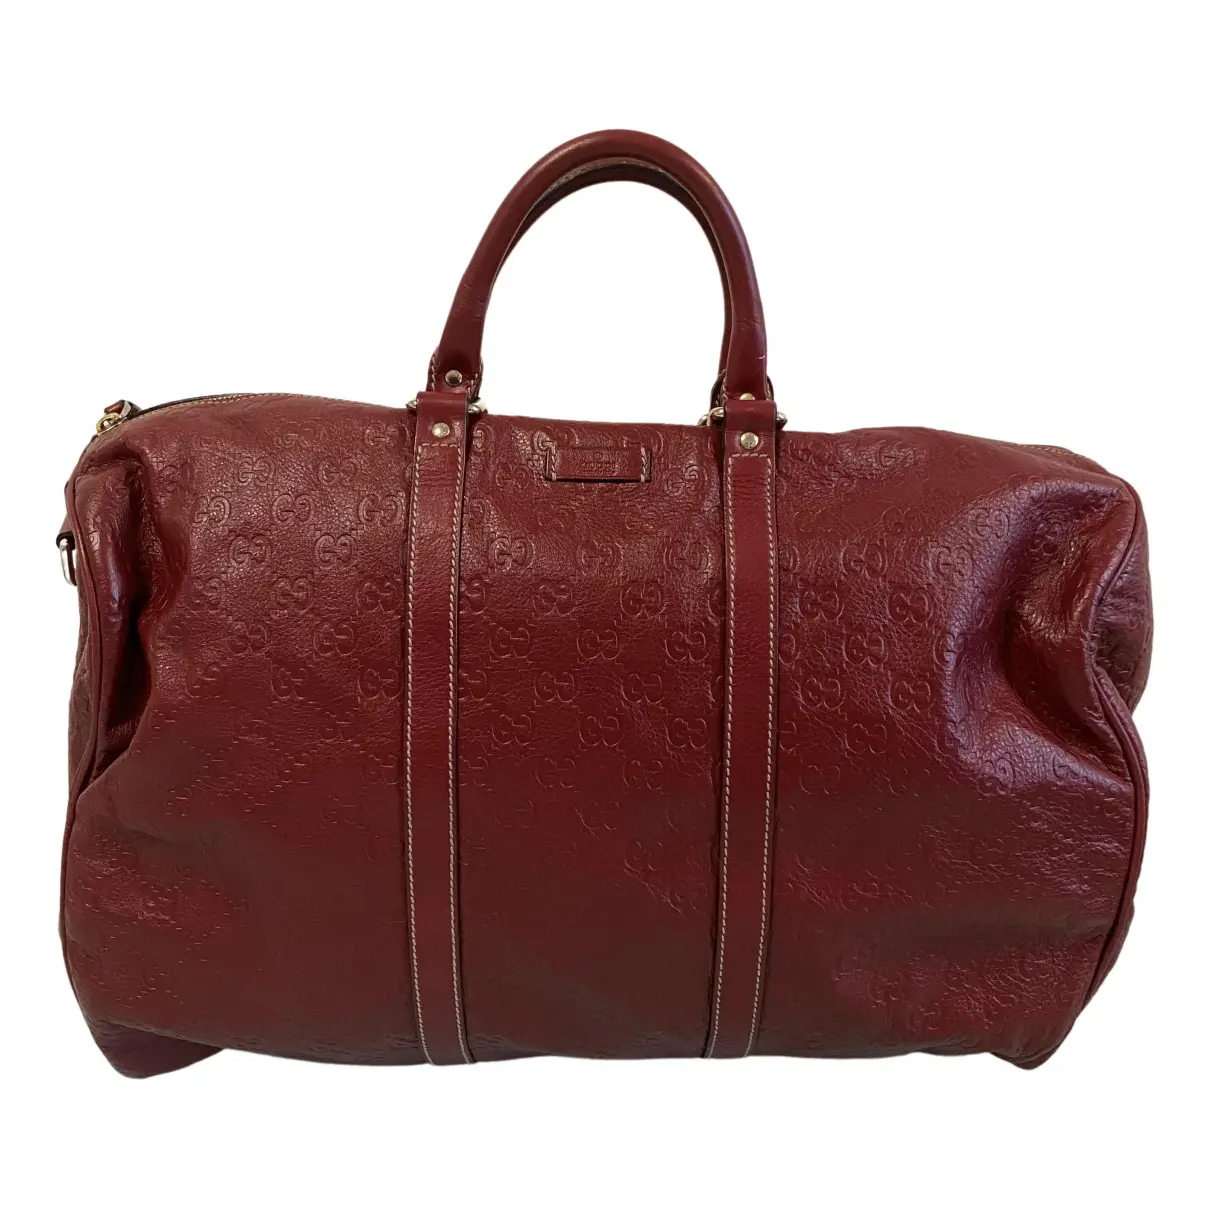 Boston leather travel bag Gucci